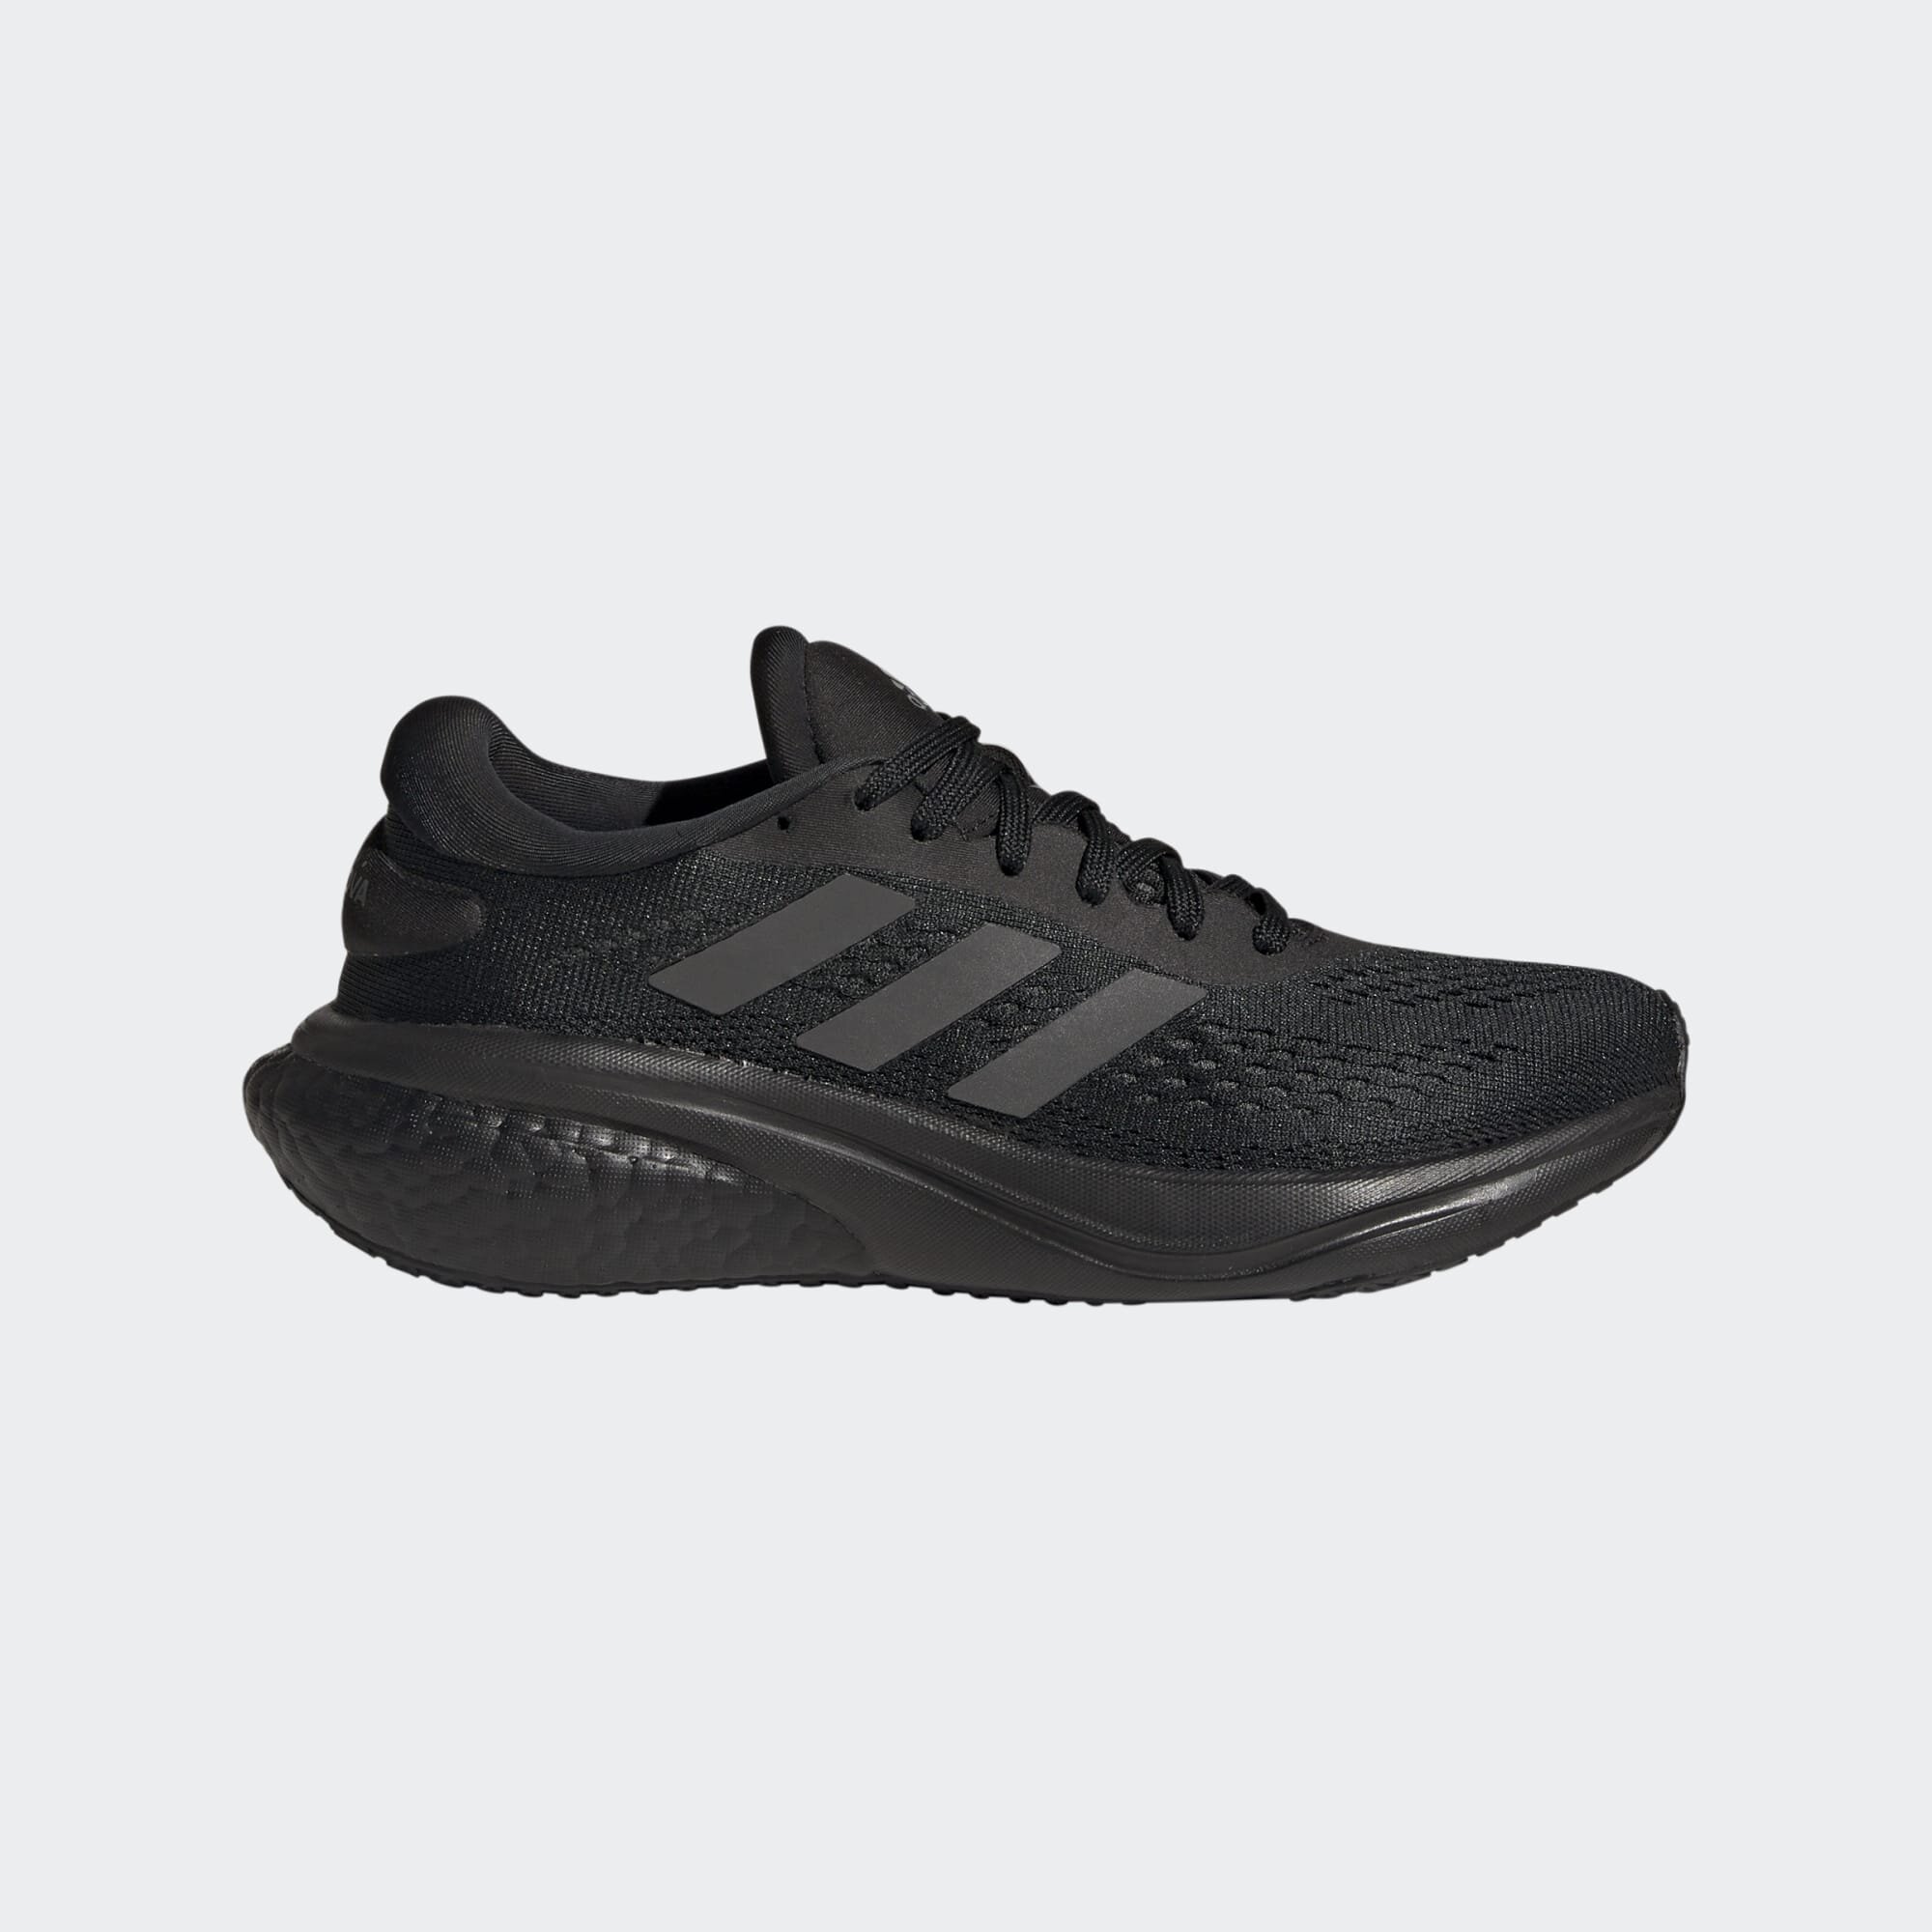 Adidas Supernova 2 Womens Running Shoes - Buy Online - Ph: 1800-370-766 ...